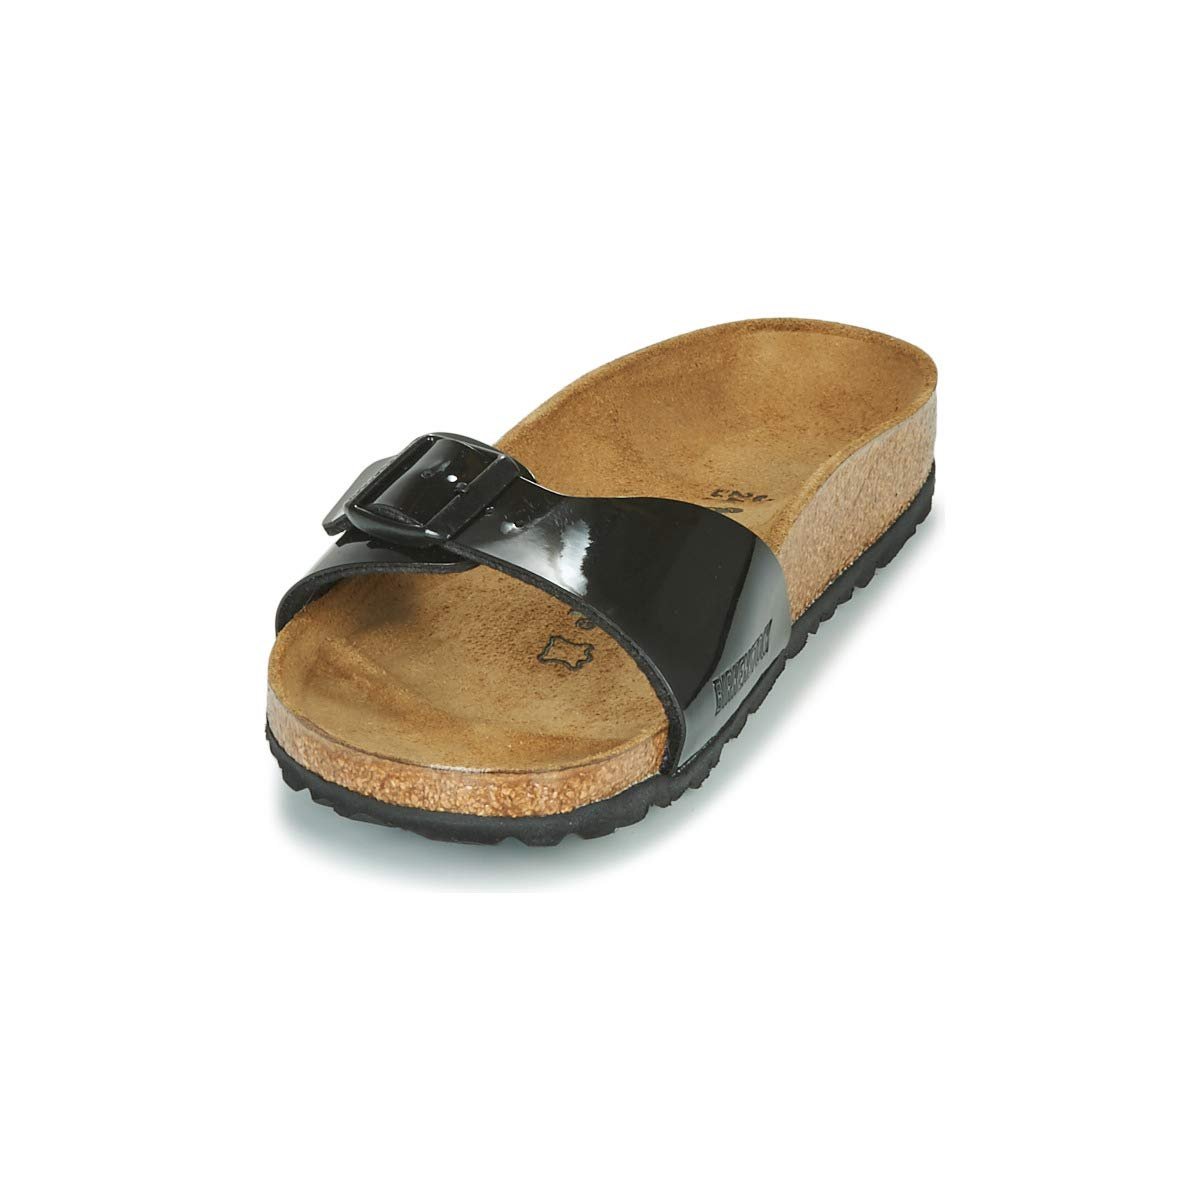 Birkenstock Unisex Madrid BS Birko-Flor Nubuck Black Sandals 6 W / 4 M US